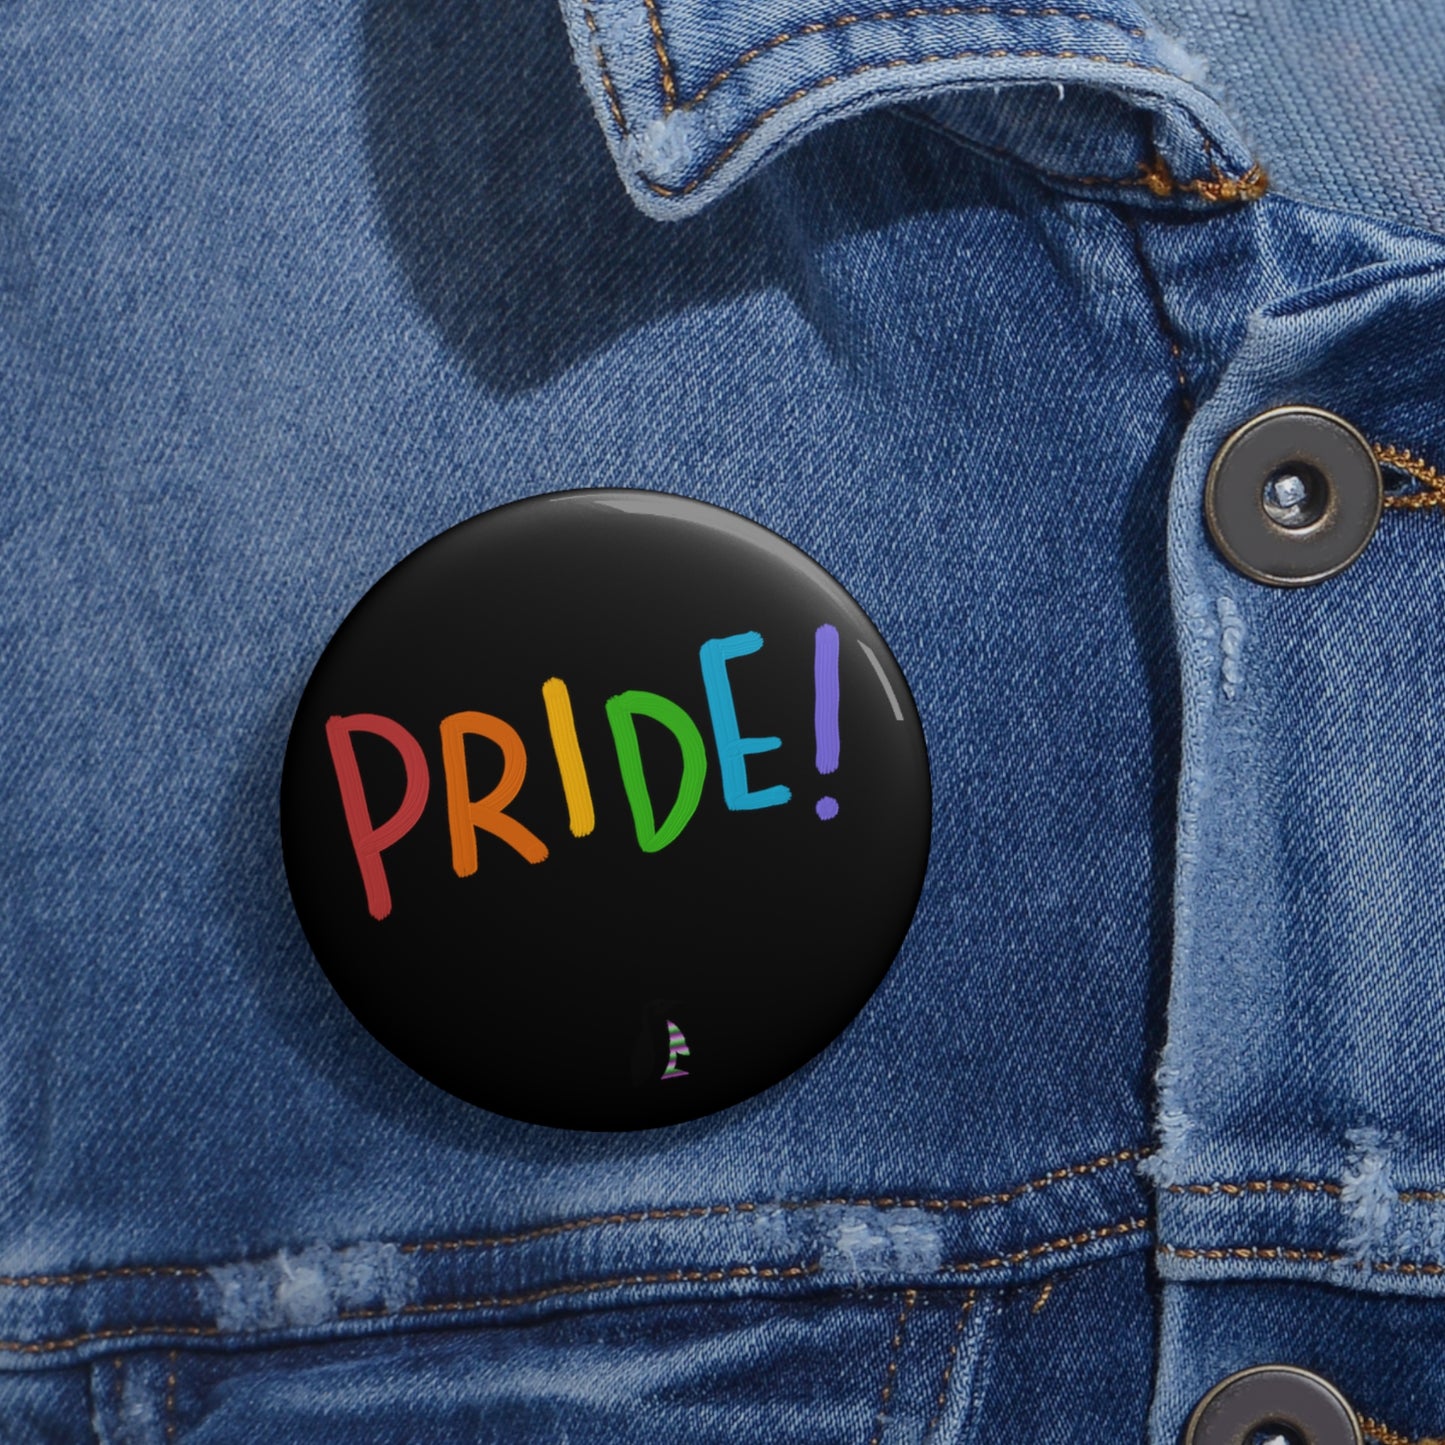 Custom Pin Buttons LGBTQ Pride Black